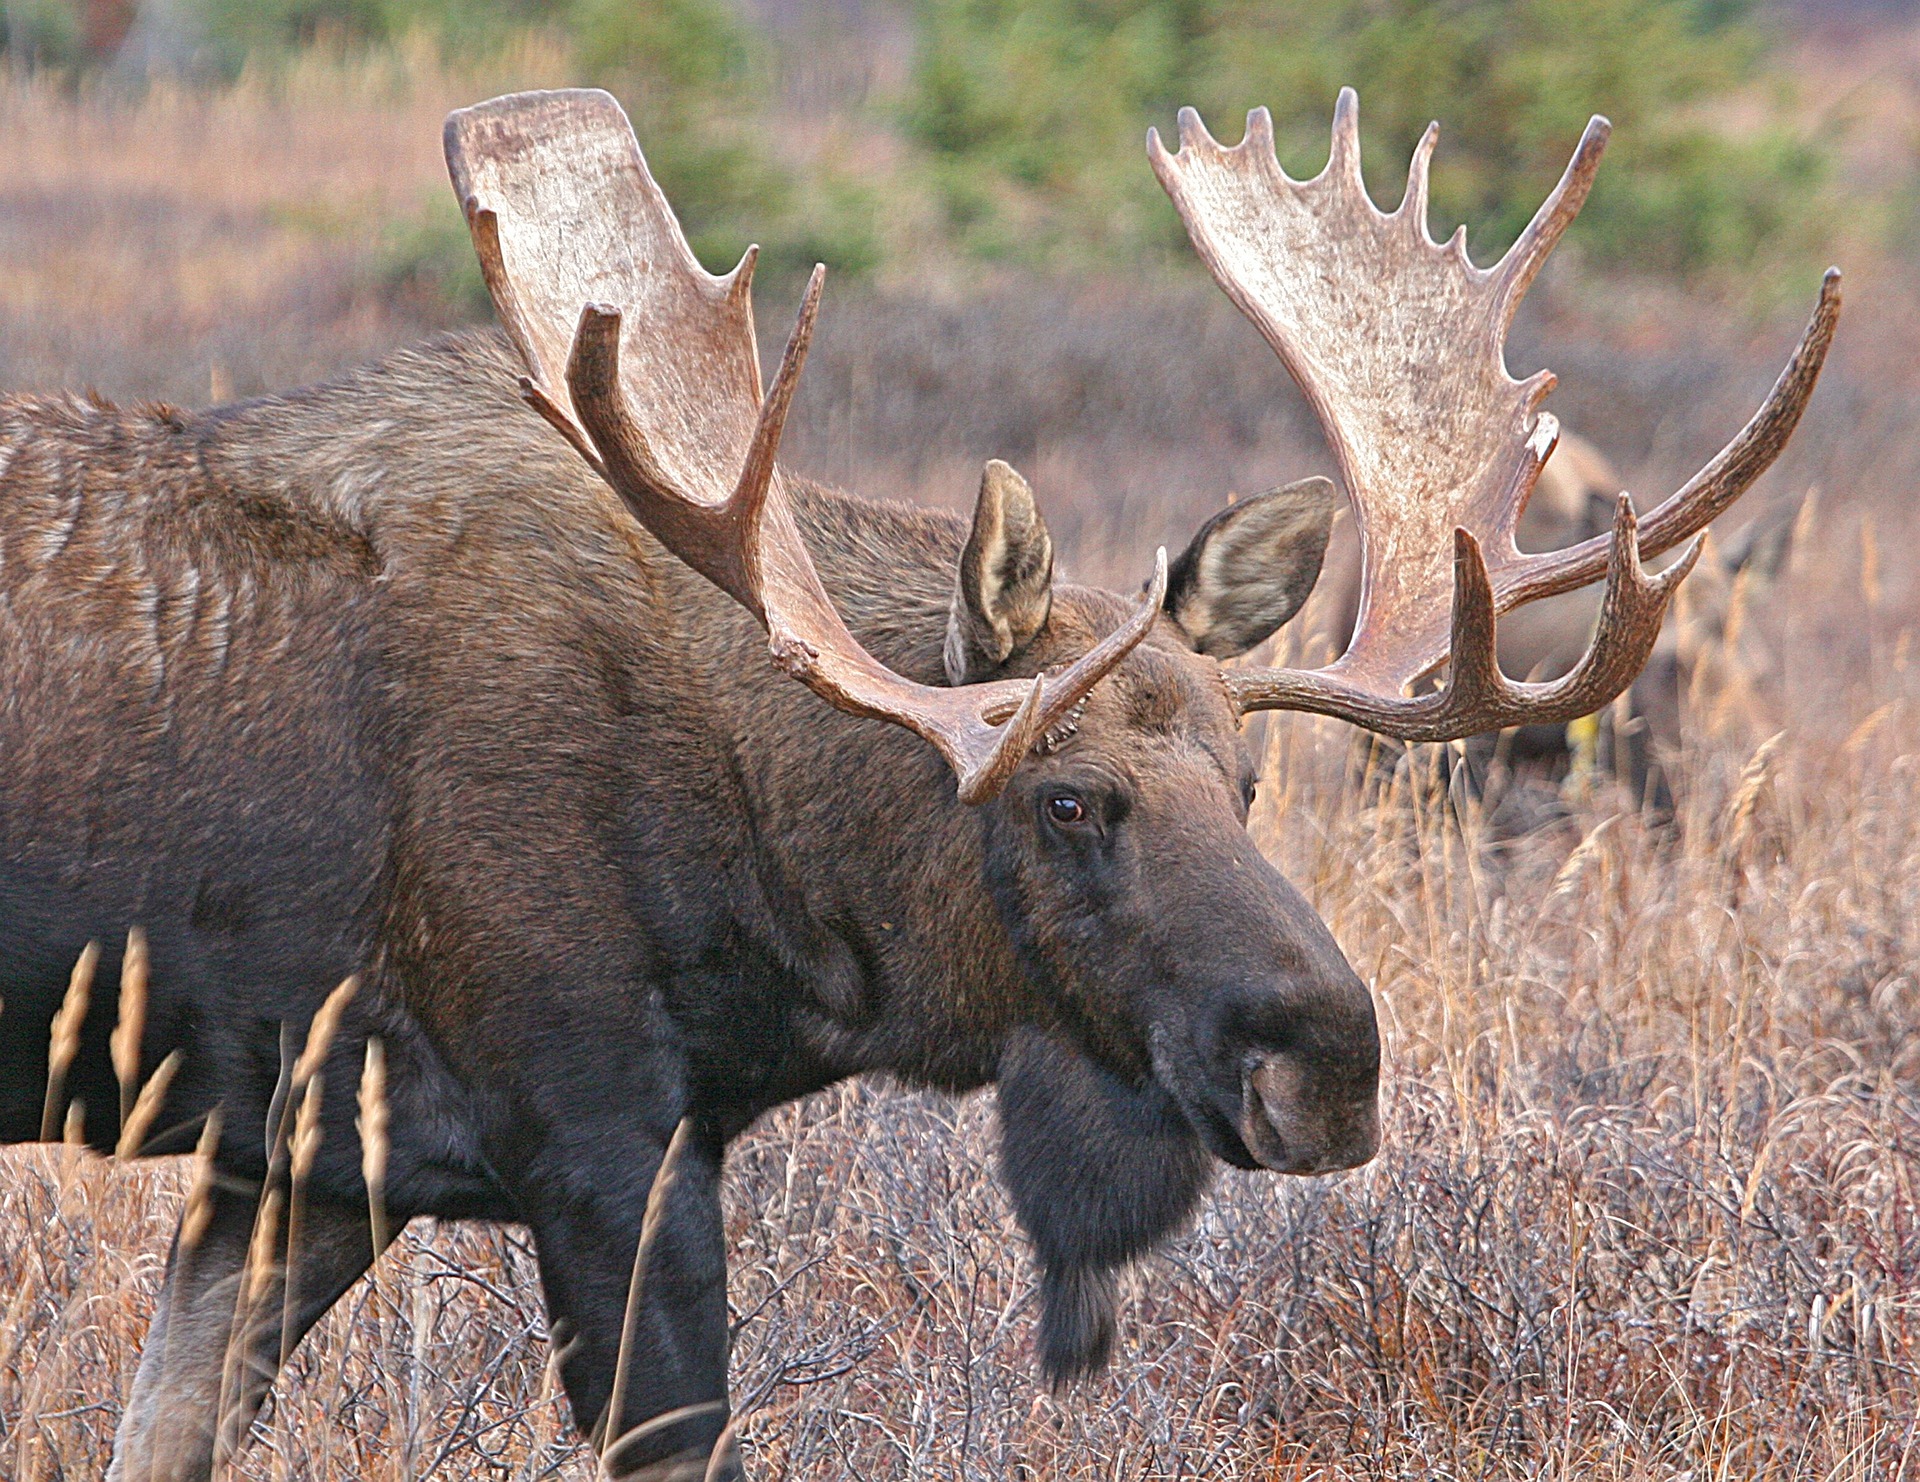 Bull moose photo